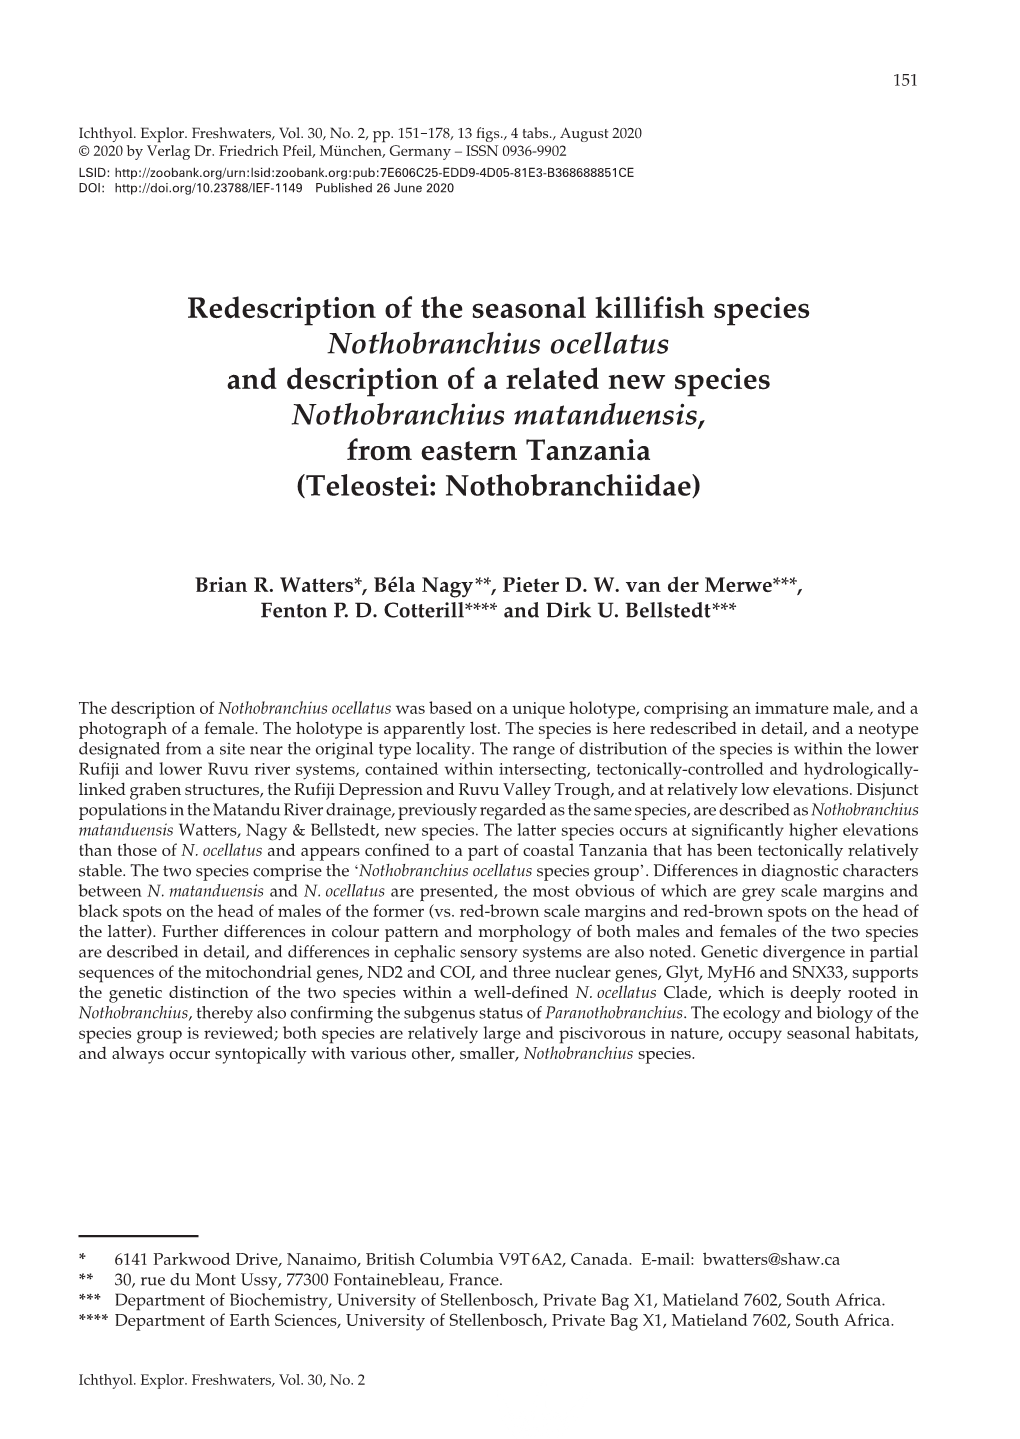 Redescription of the Seasonal Killifish Species Nothobranchius Ocellatus